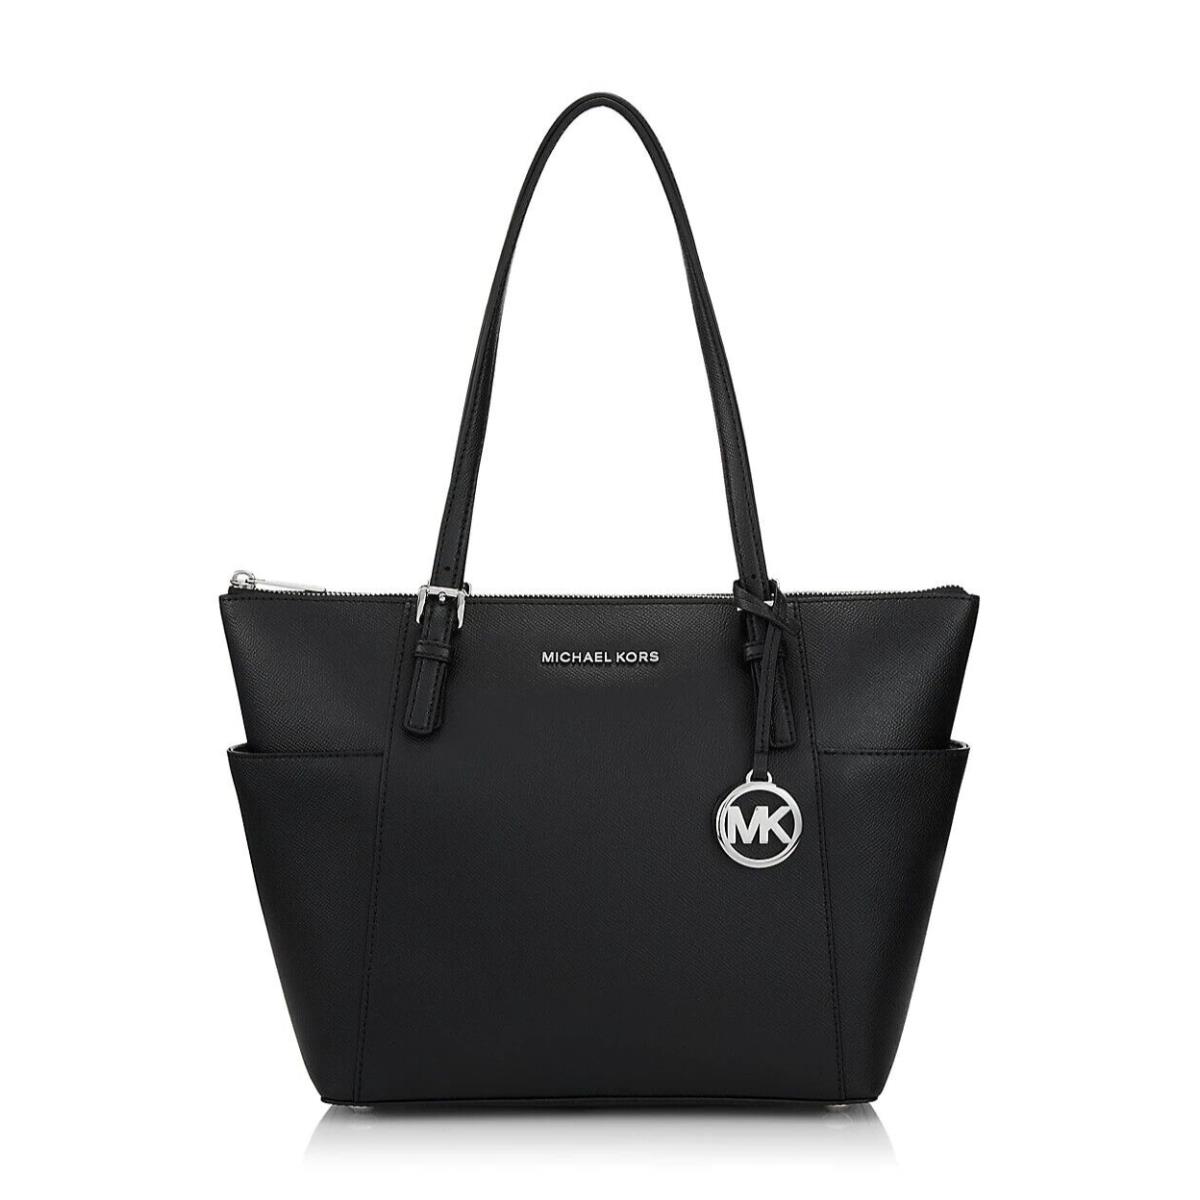 Michael Kors Top Zip Black Leather Tote Handbag